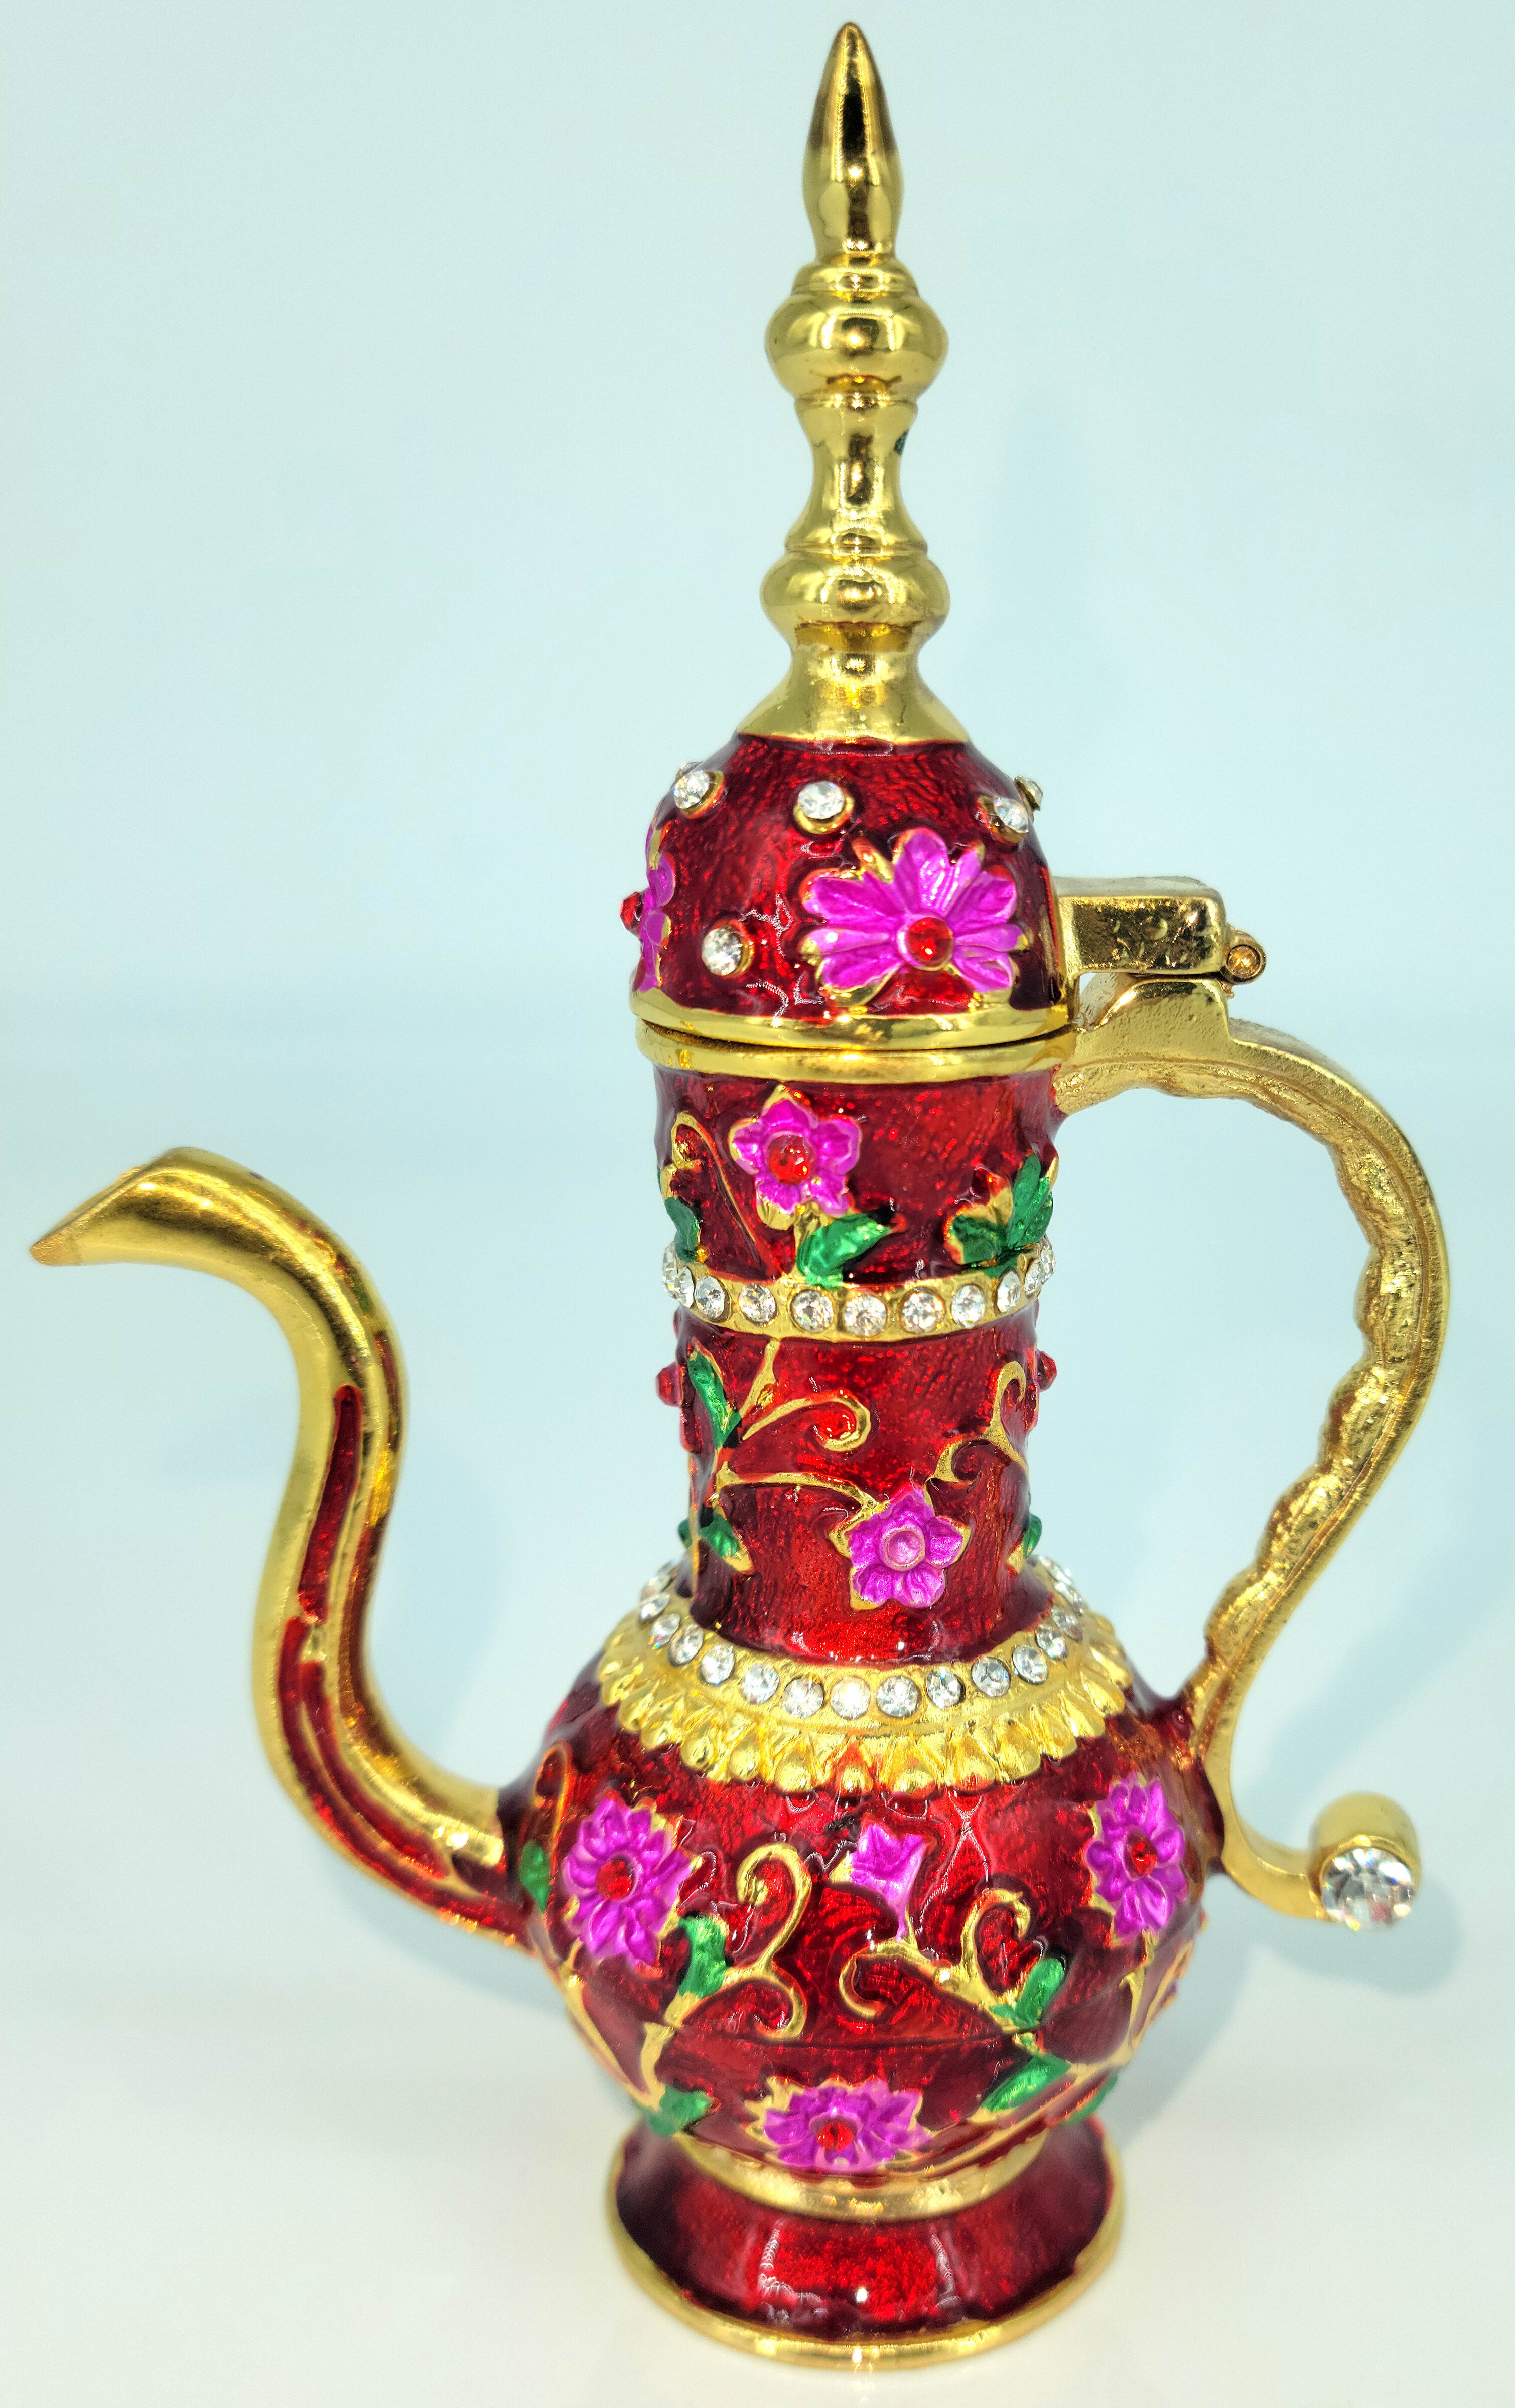 Teapot Trinket Box Decoration Piece I Pakistani Artisan Design I Decoration Piece Accent I Metal Stone Decor